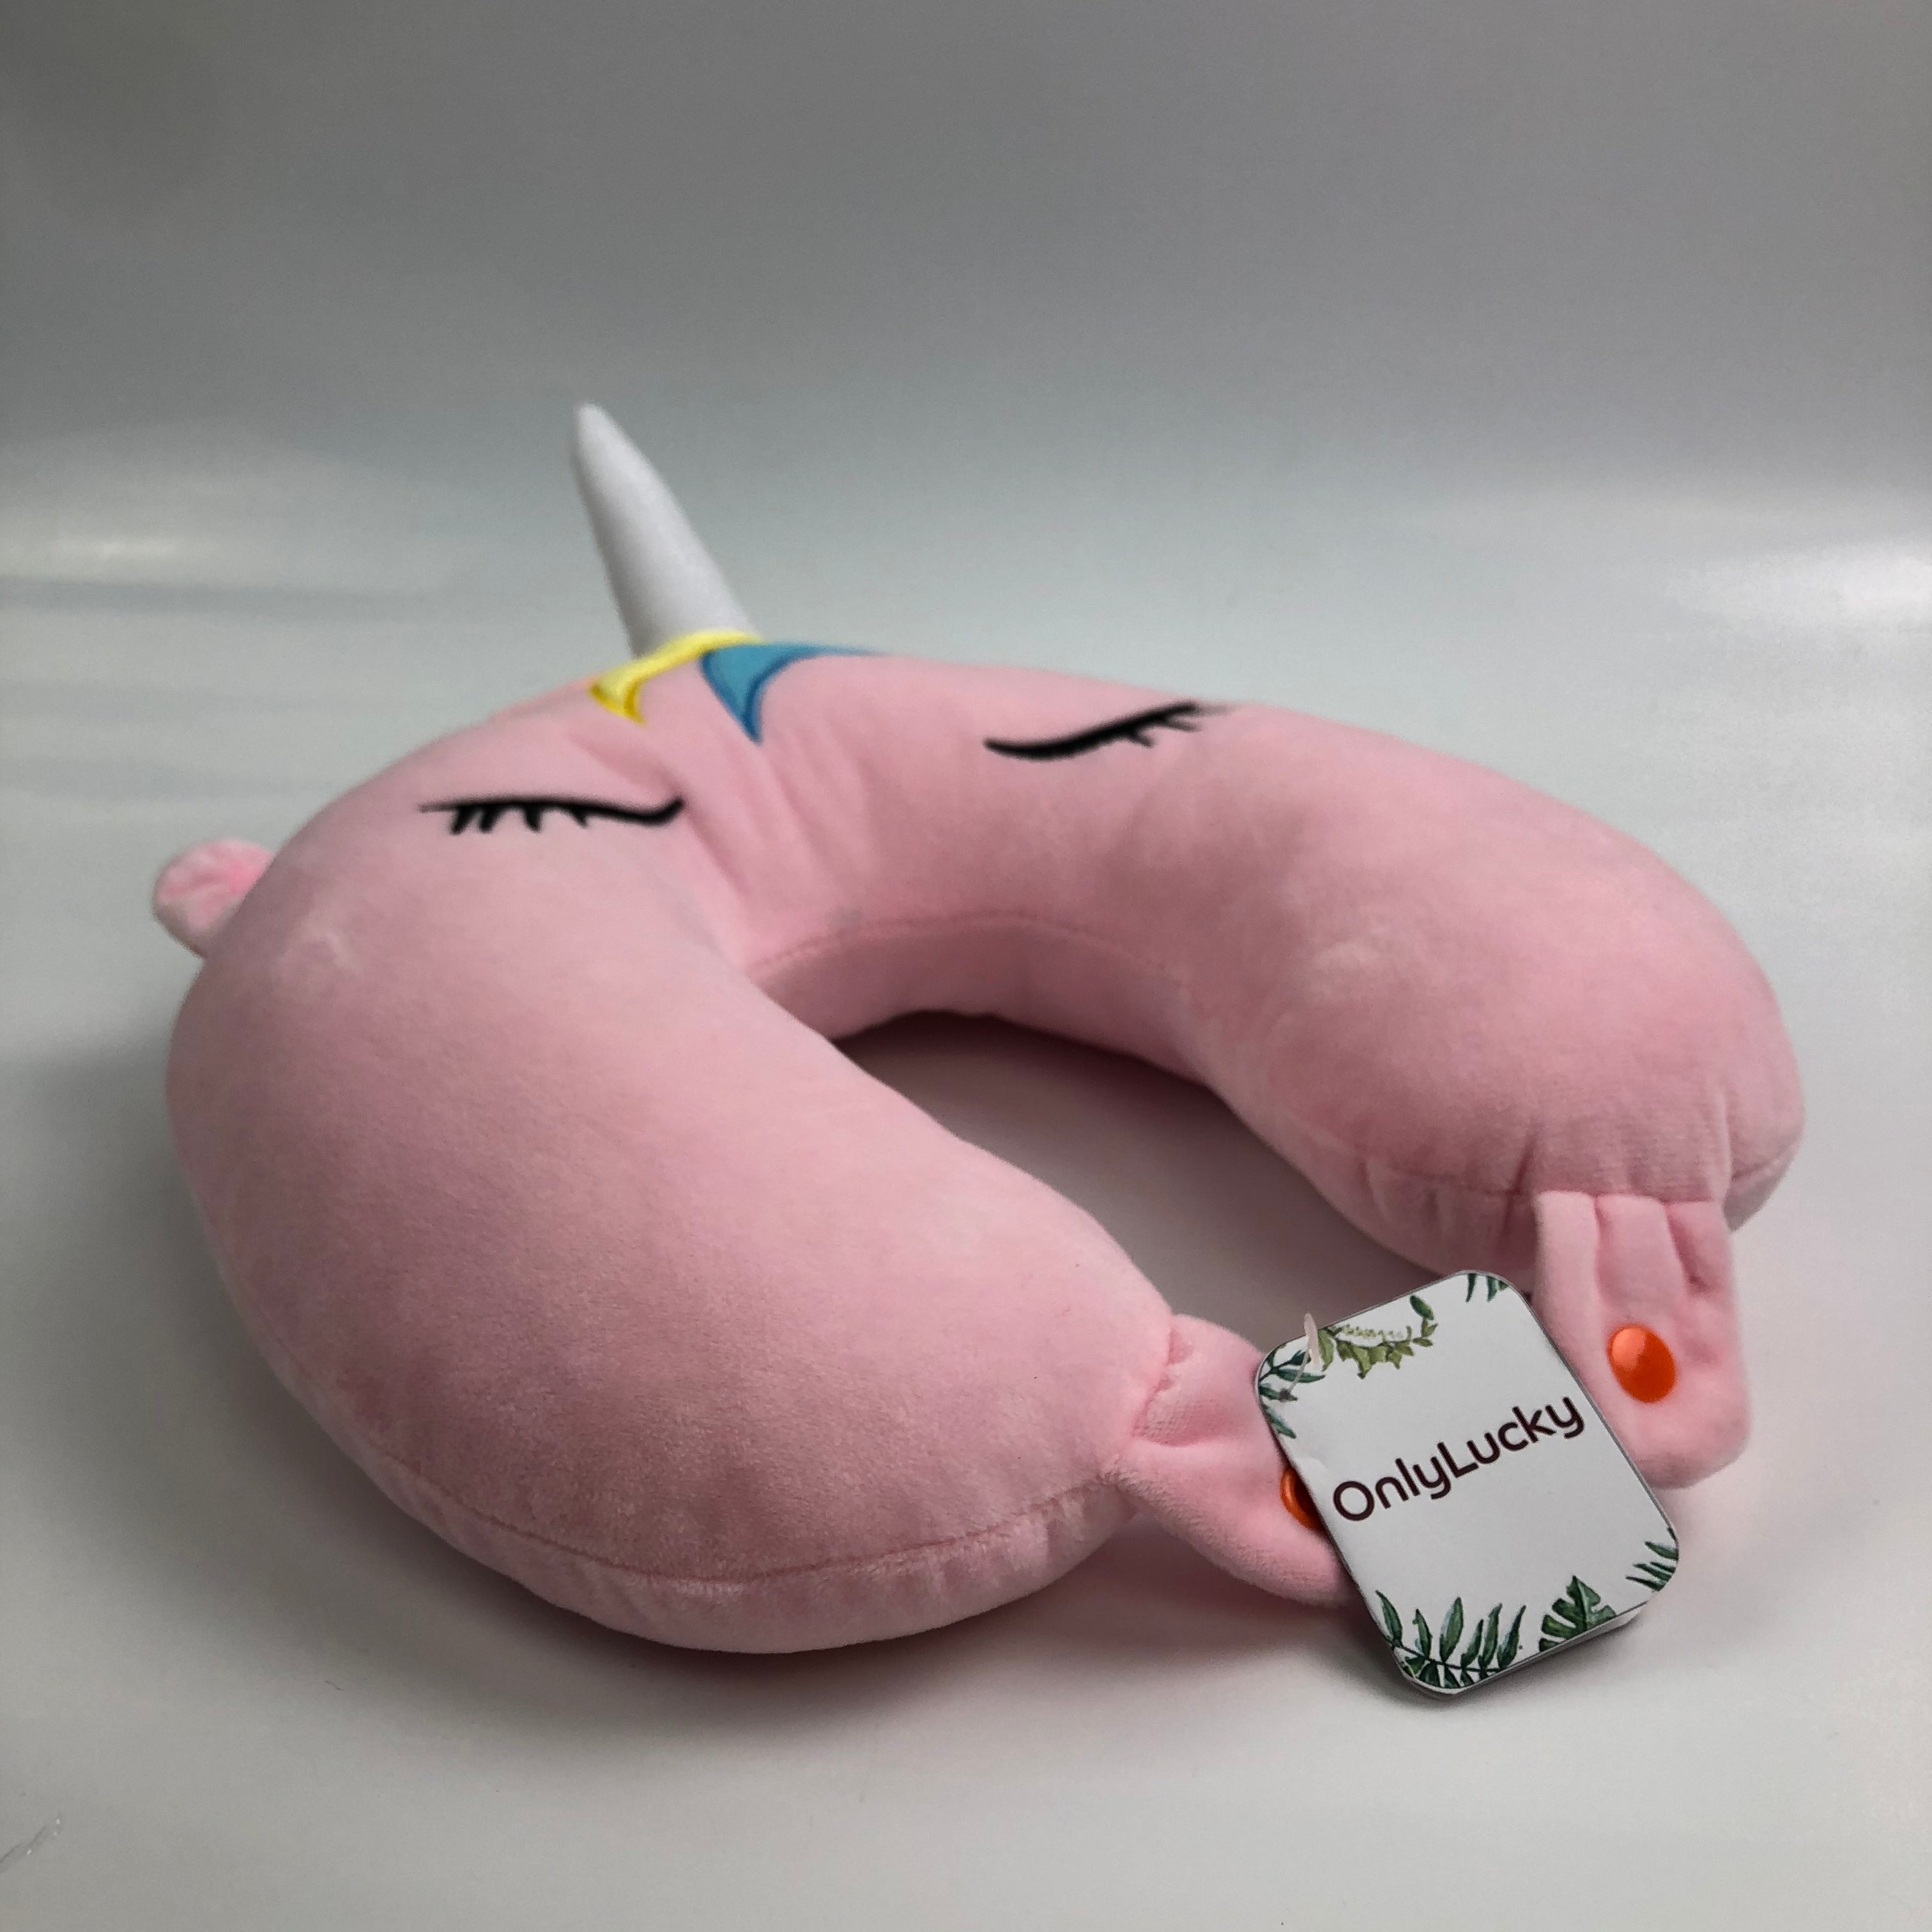 OnlyLucky Cute Unicorn Travel Pillow - Glow Guards